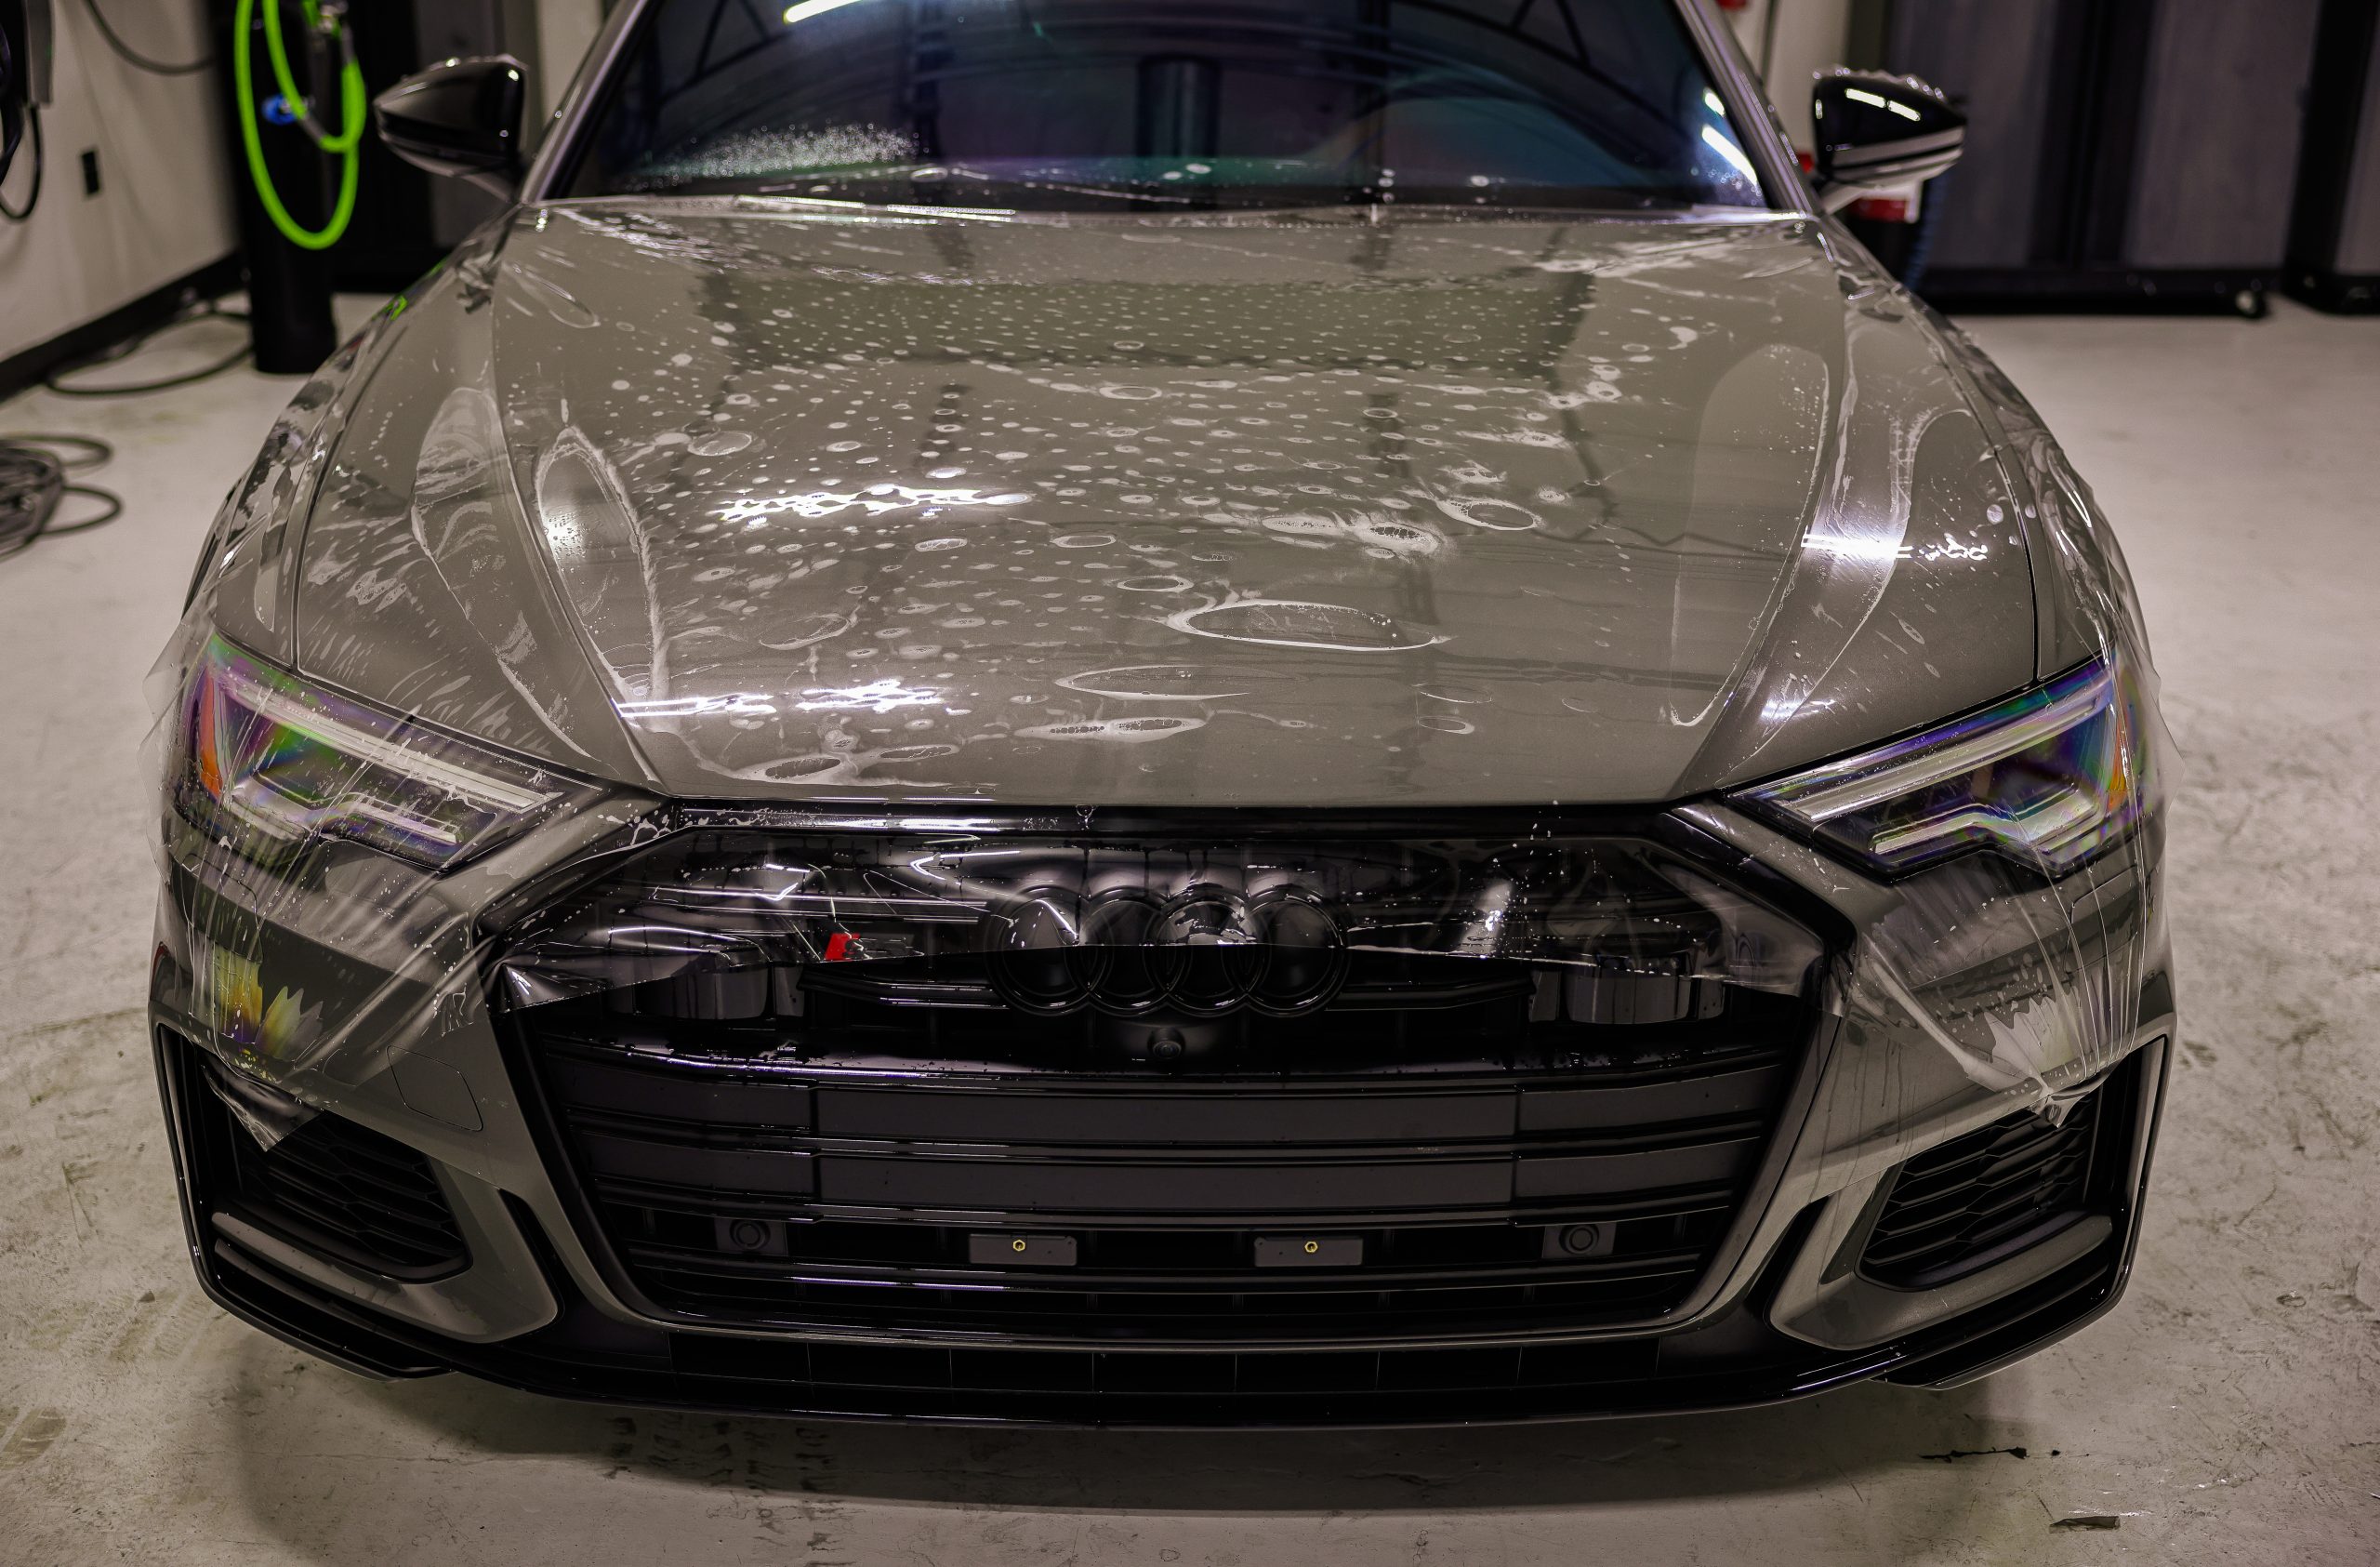 SunTek PPF, Evolve Window Tint & Gtechniq Coating For Audi S6 - Automotive Paint Protection, Tint and paint coating in San Antonio, Texas 2